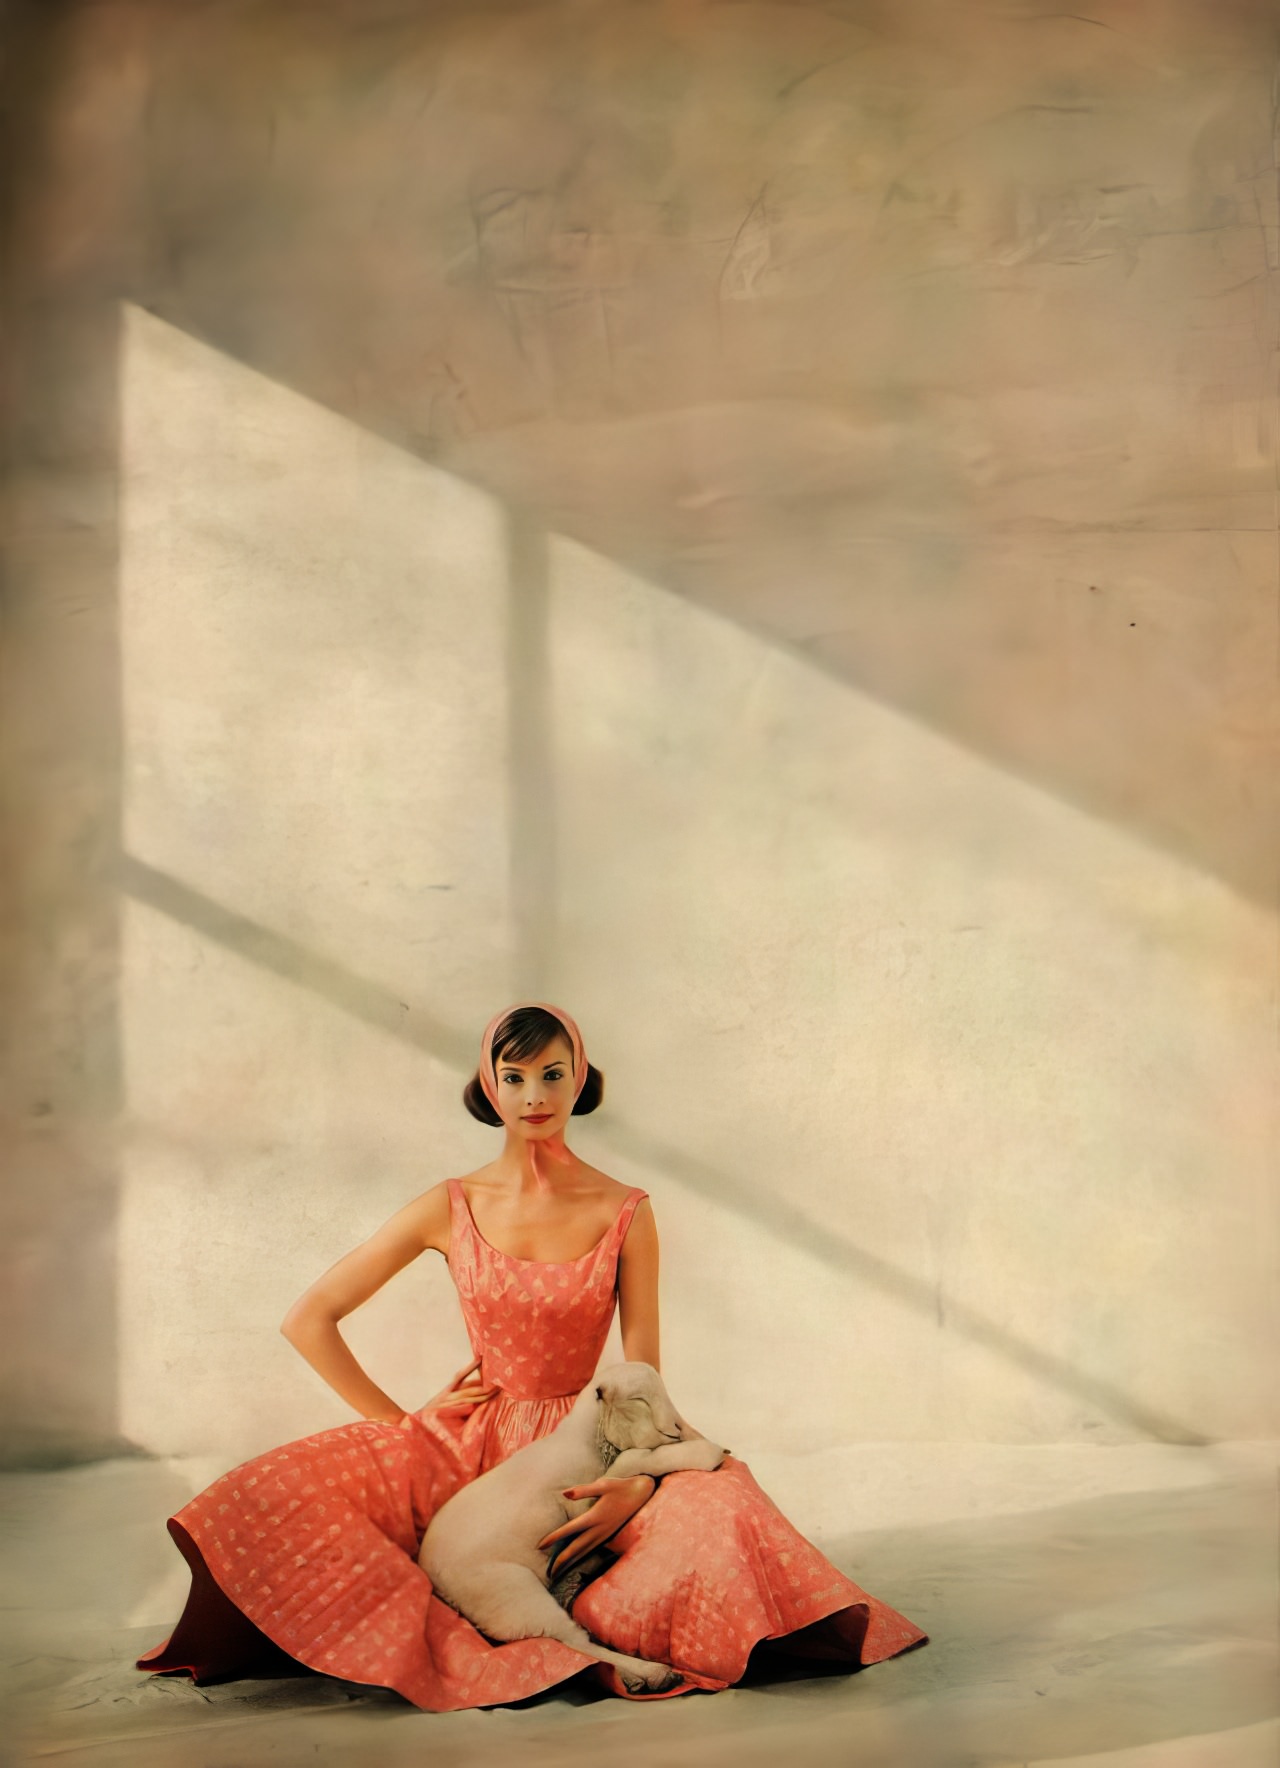 Iris Bianchi in a pink beach club dress by Anne Fogarty, Harper's Bazaar, April 1959.